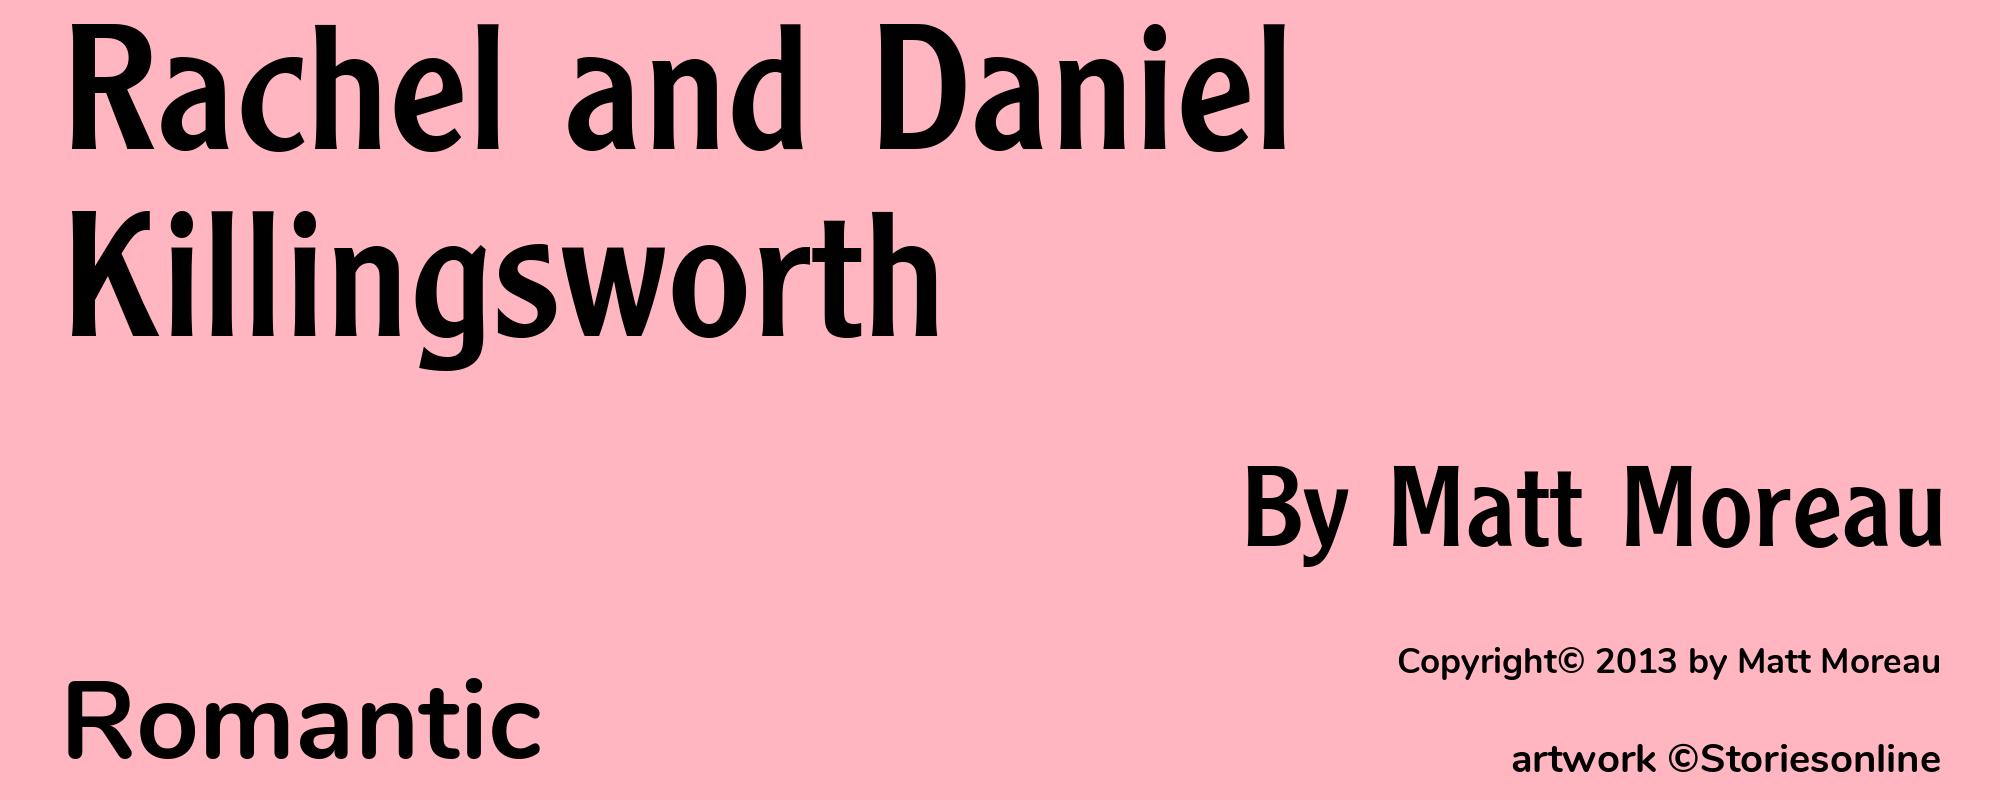 Rachel and Daniel Killingsworth - Cover